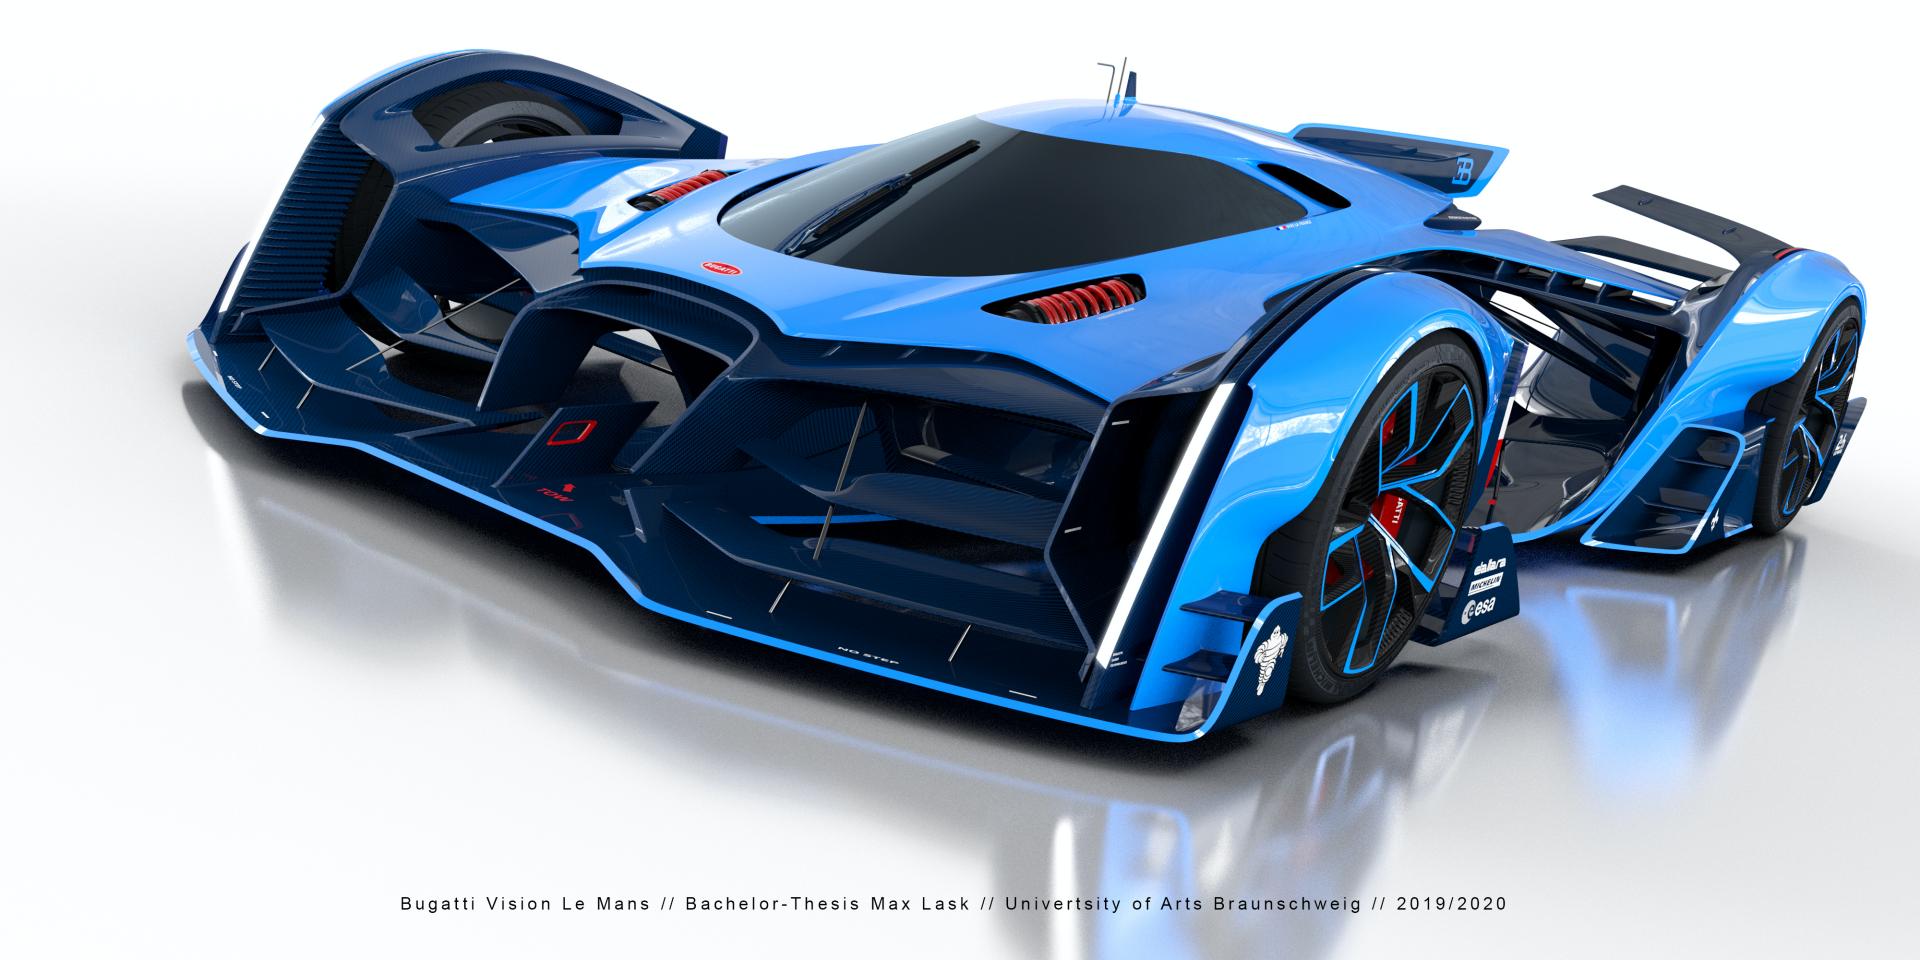 Berita, Bugatti-Vision-le-mans-max-lask: Bugatti Bocorkan Mobil Baru Khusus Sikuit, Gahar Nih!